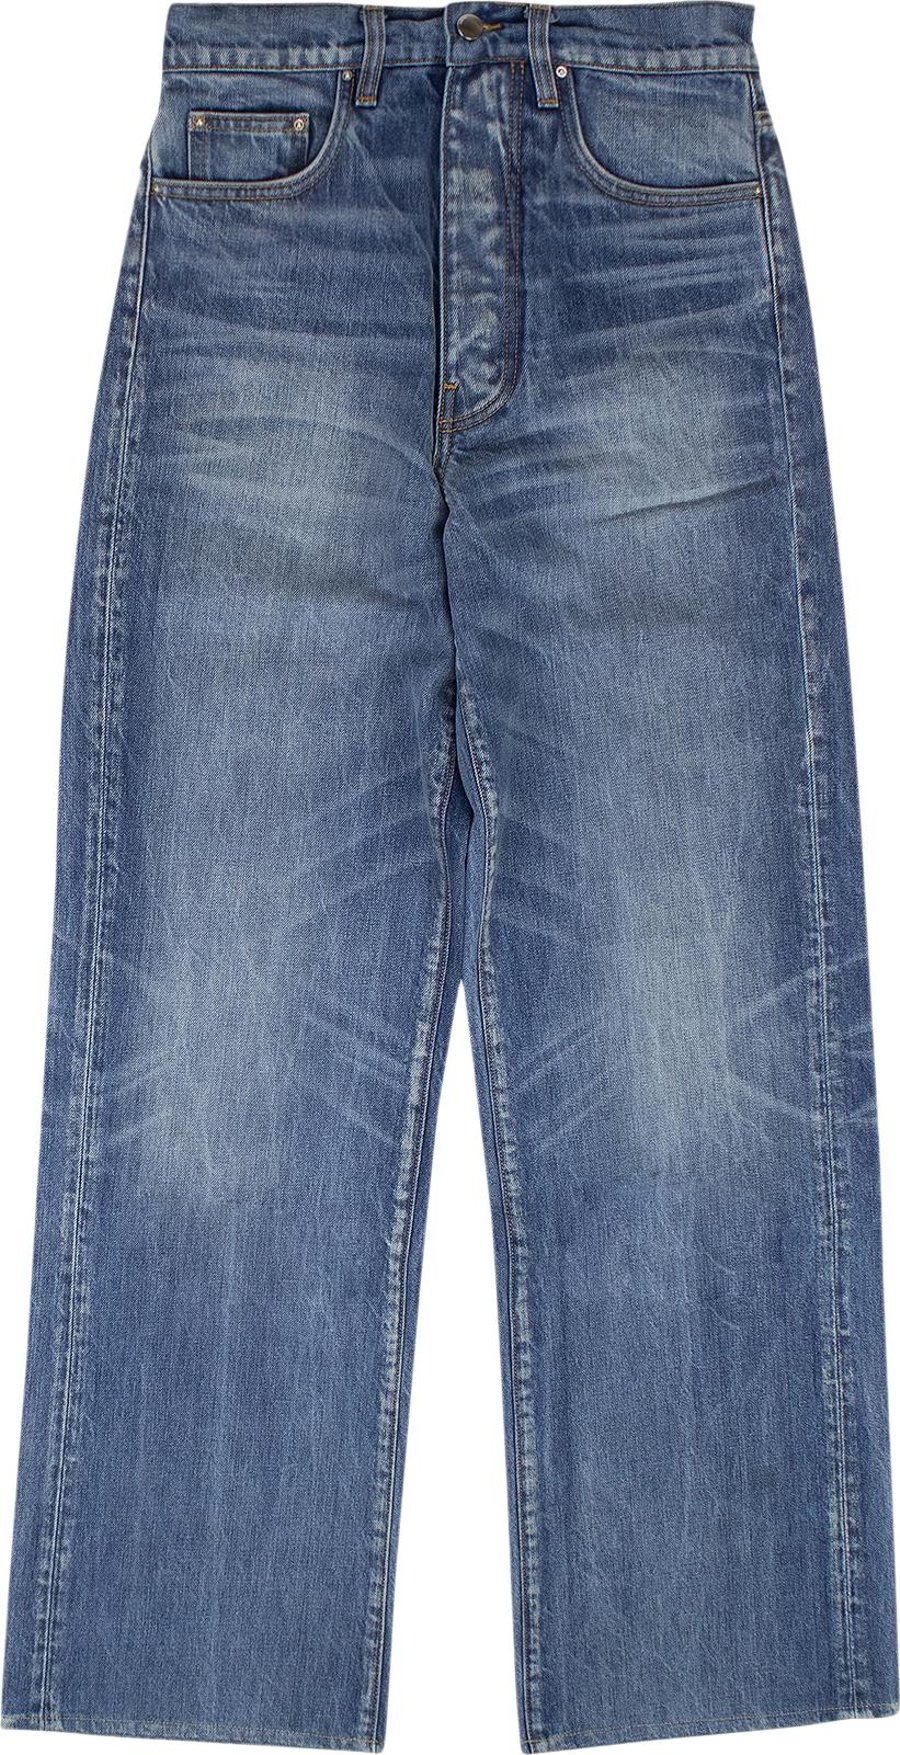 Buy Amiri Baggy Jeans 'Blue' - MDF007 479 BLUE | GOAT